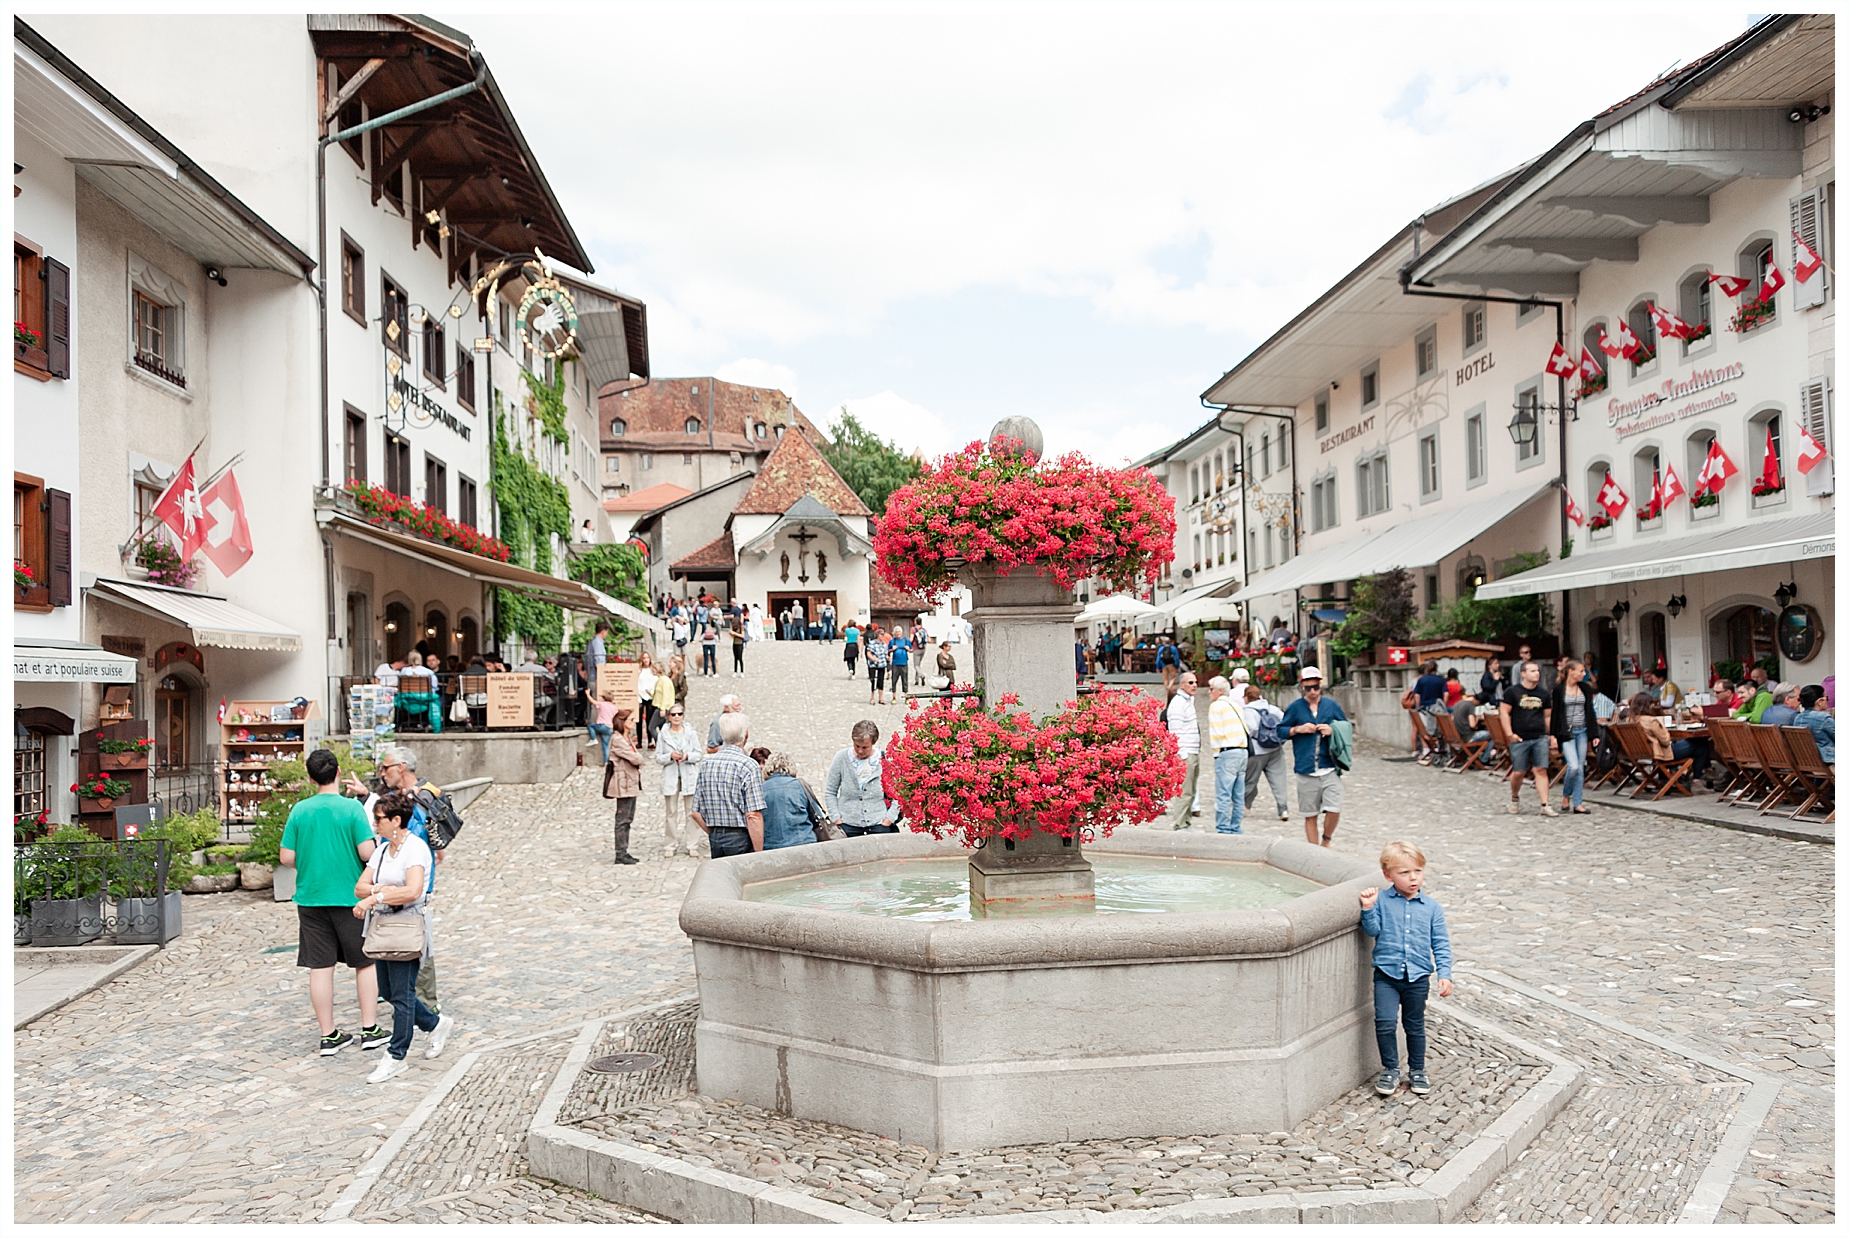 Gruyères Switzerland medieval castle town square